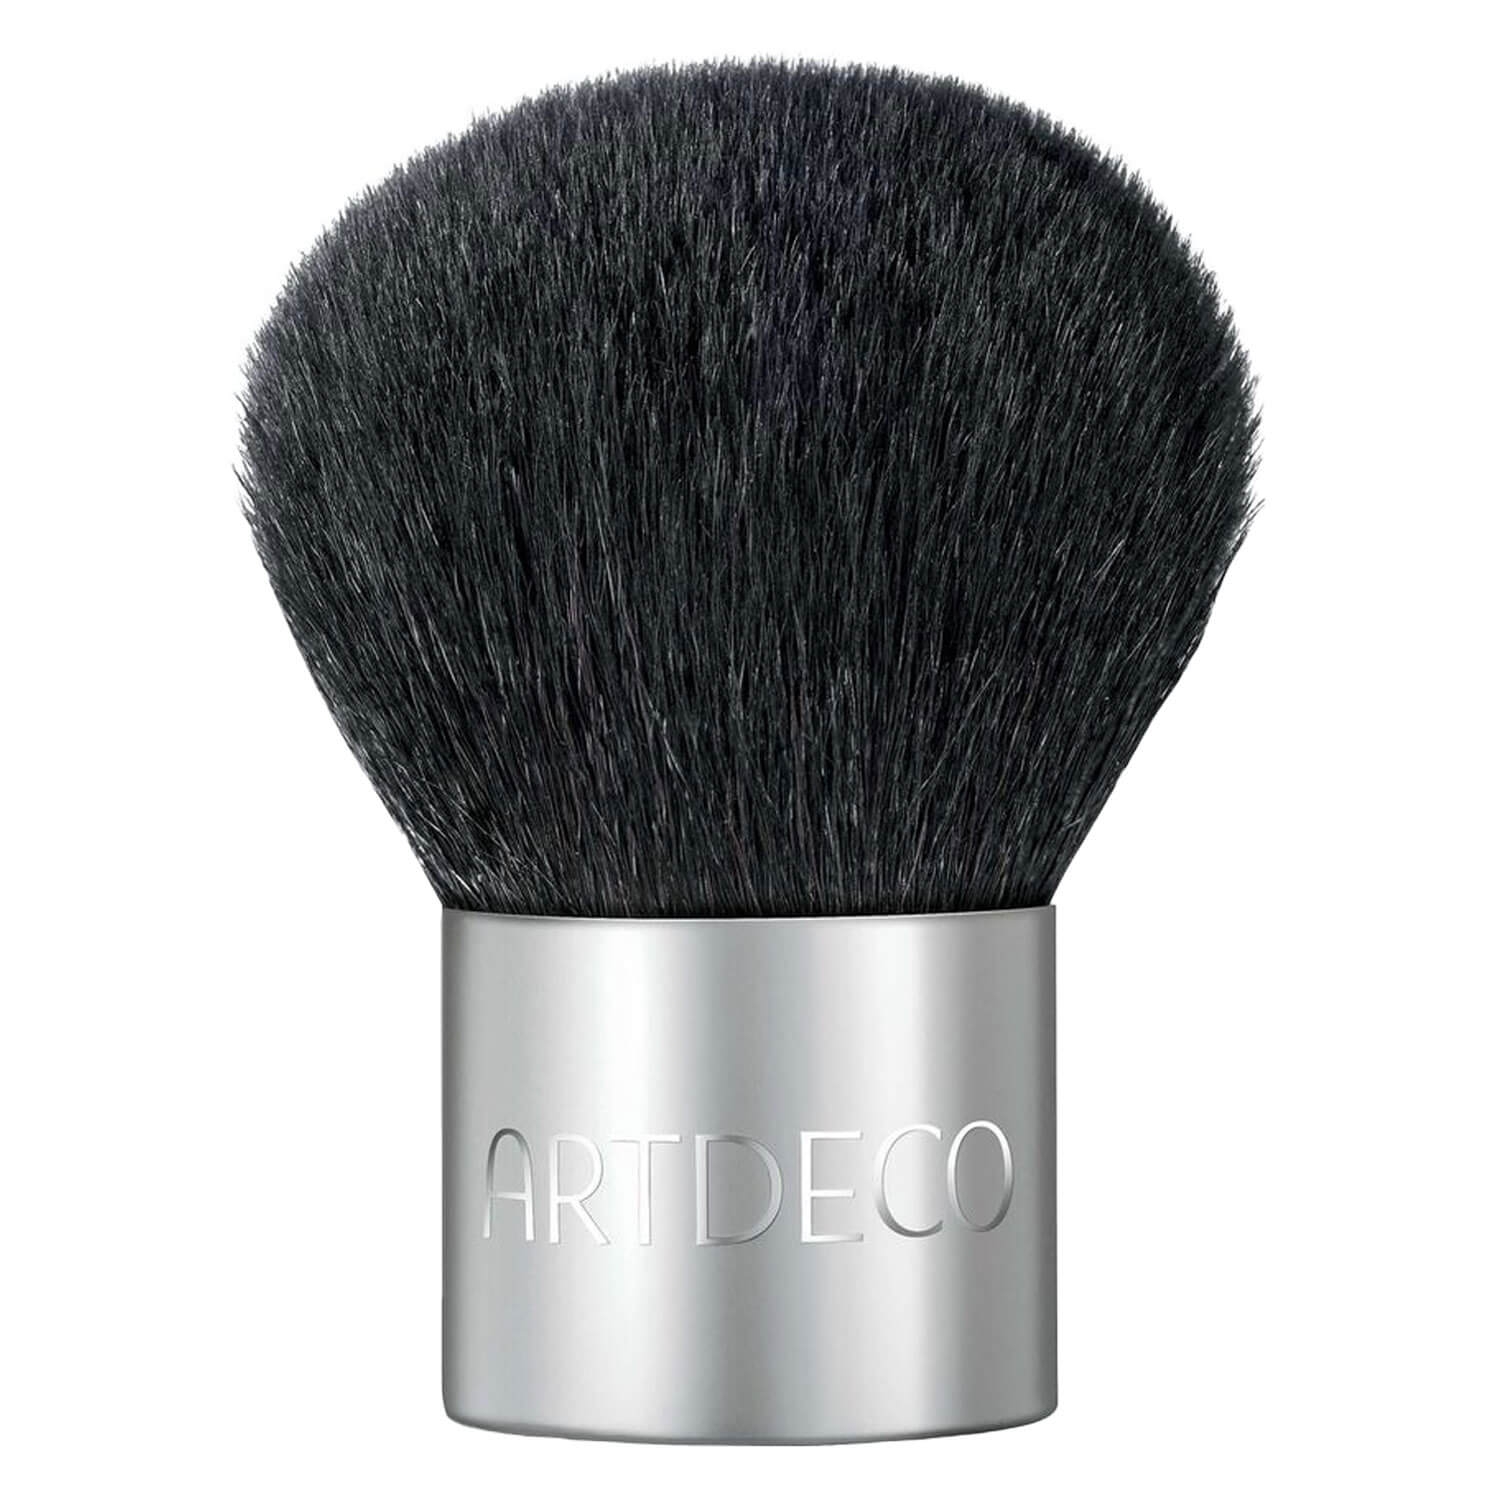 Produktbild von Artdeco Tools - Kabuki Brush for Mineral Powder Foundation